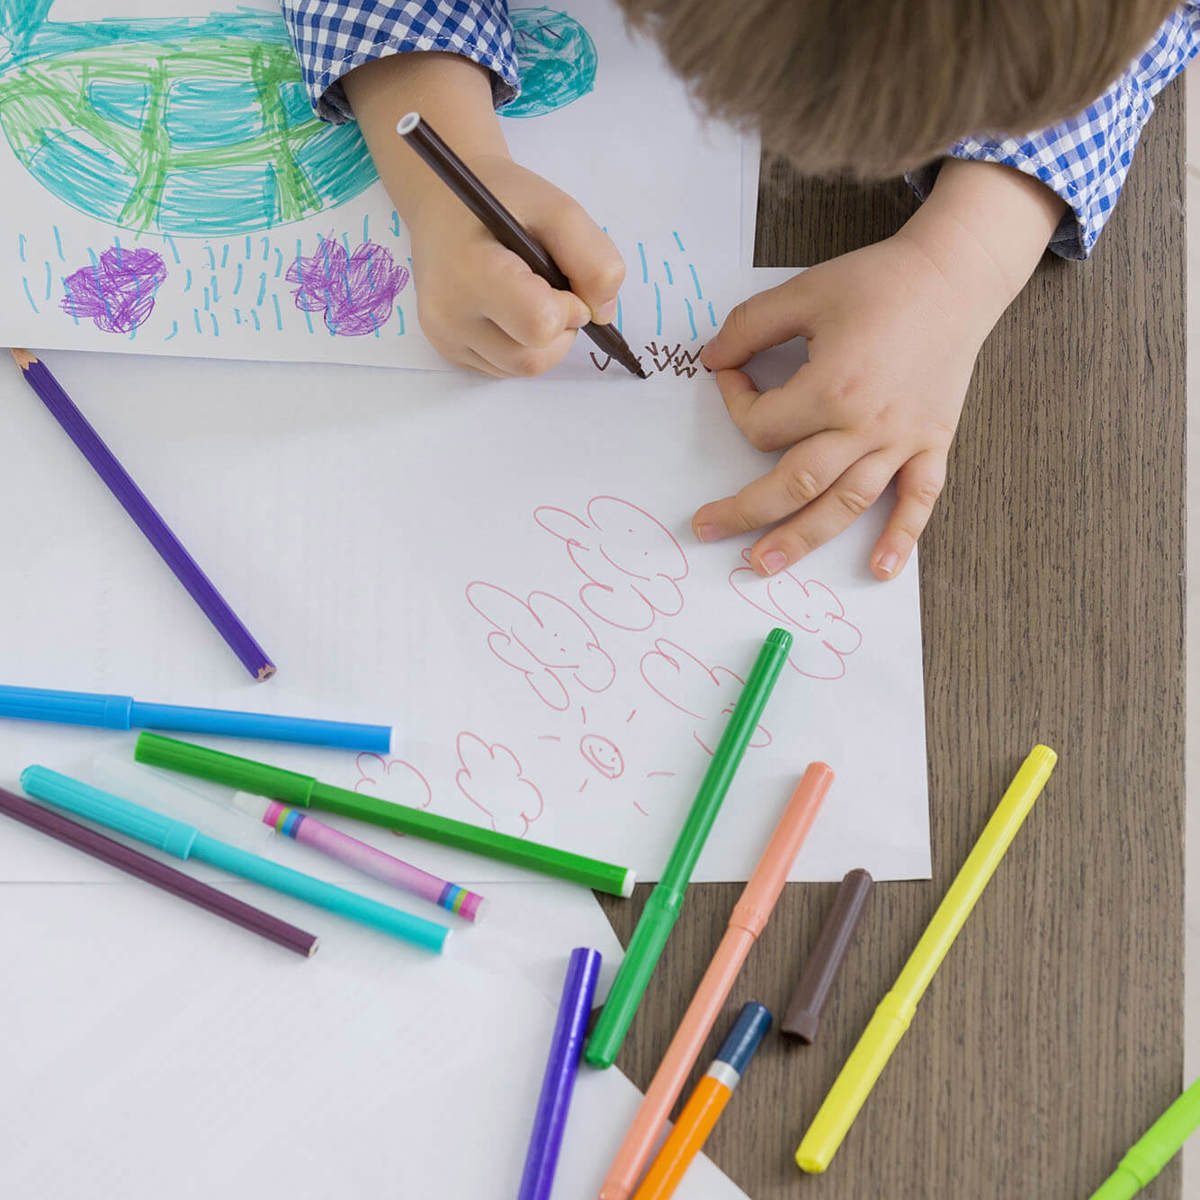 Pupils-learning felt tip drawings 